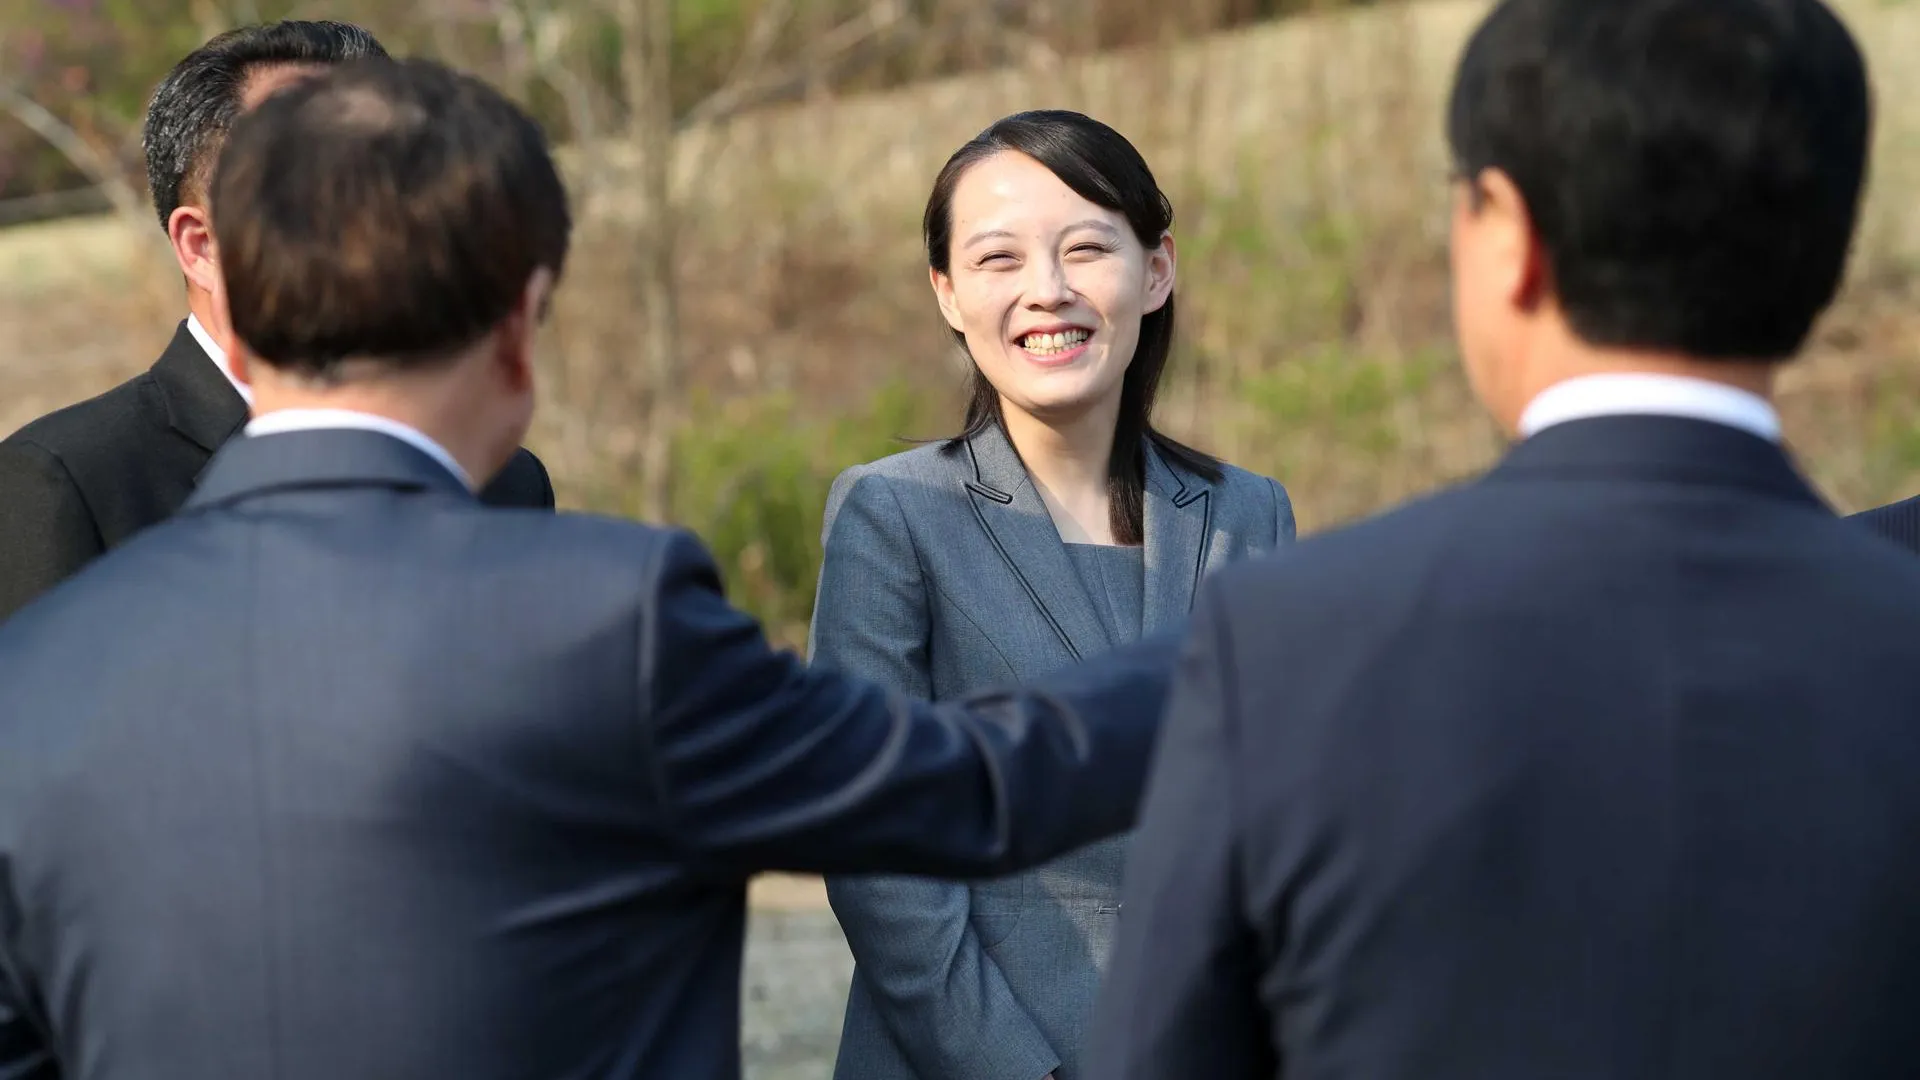 Младшая сестра лидера КНДР Ким Е Чжон разговаривает с южнокорейской делегацией, 2018 год. Фото: Inter-Korean Summit Press Corps/Global Look Press